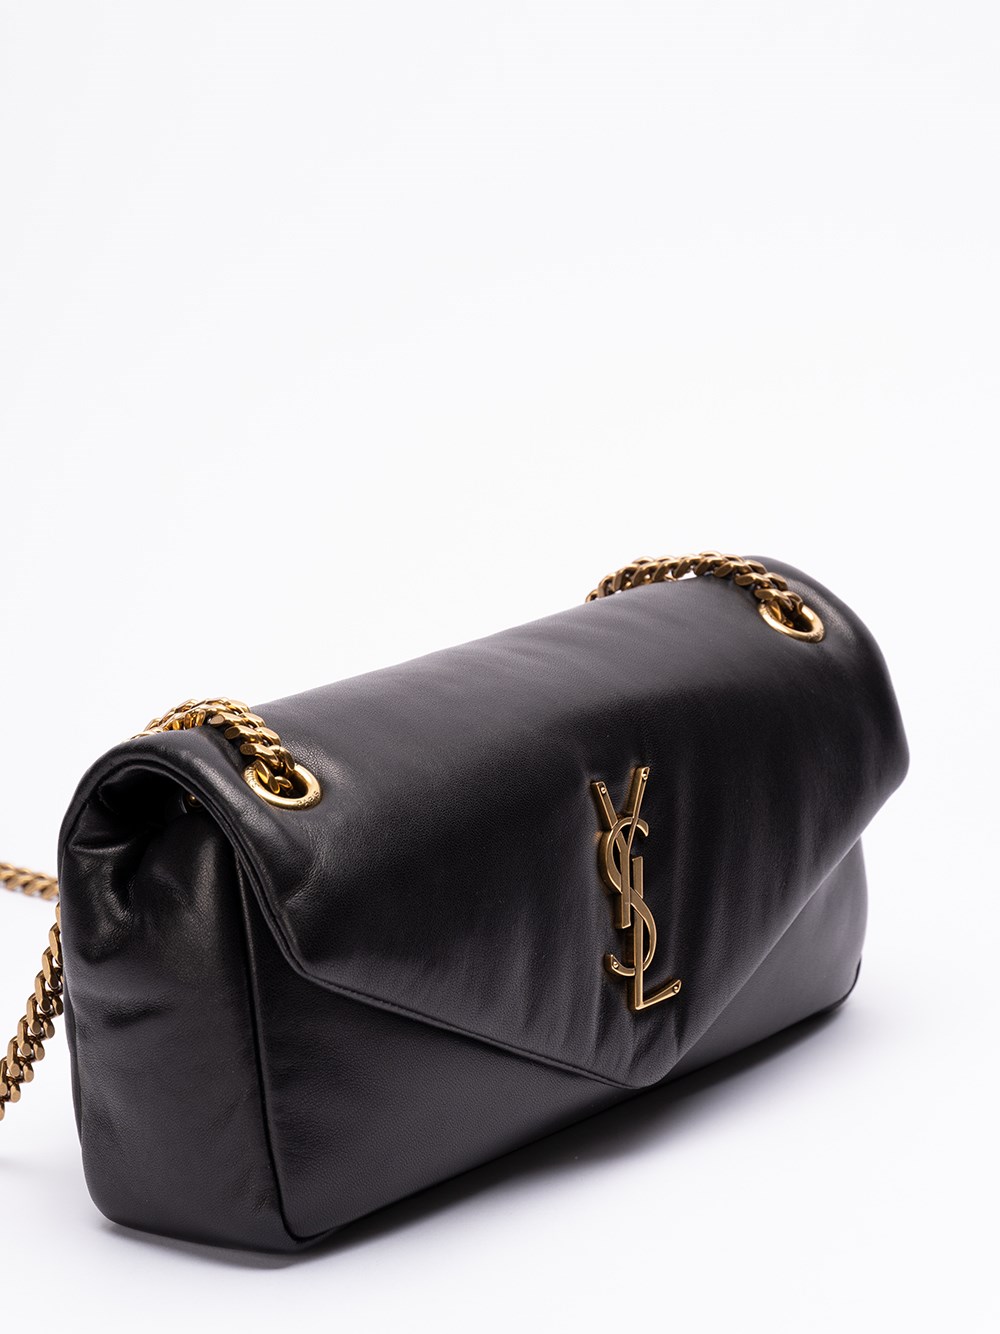 Saint Laurent Calypso - Shoulder bag for Woman - Black - 734153AACQO-1000